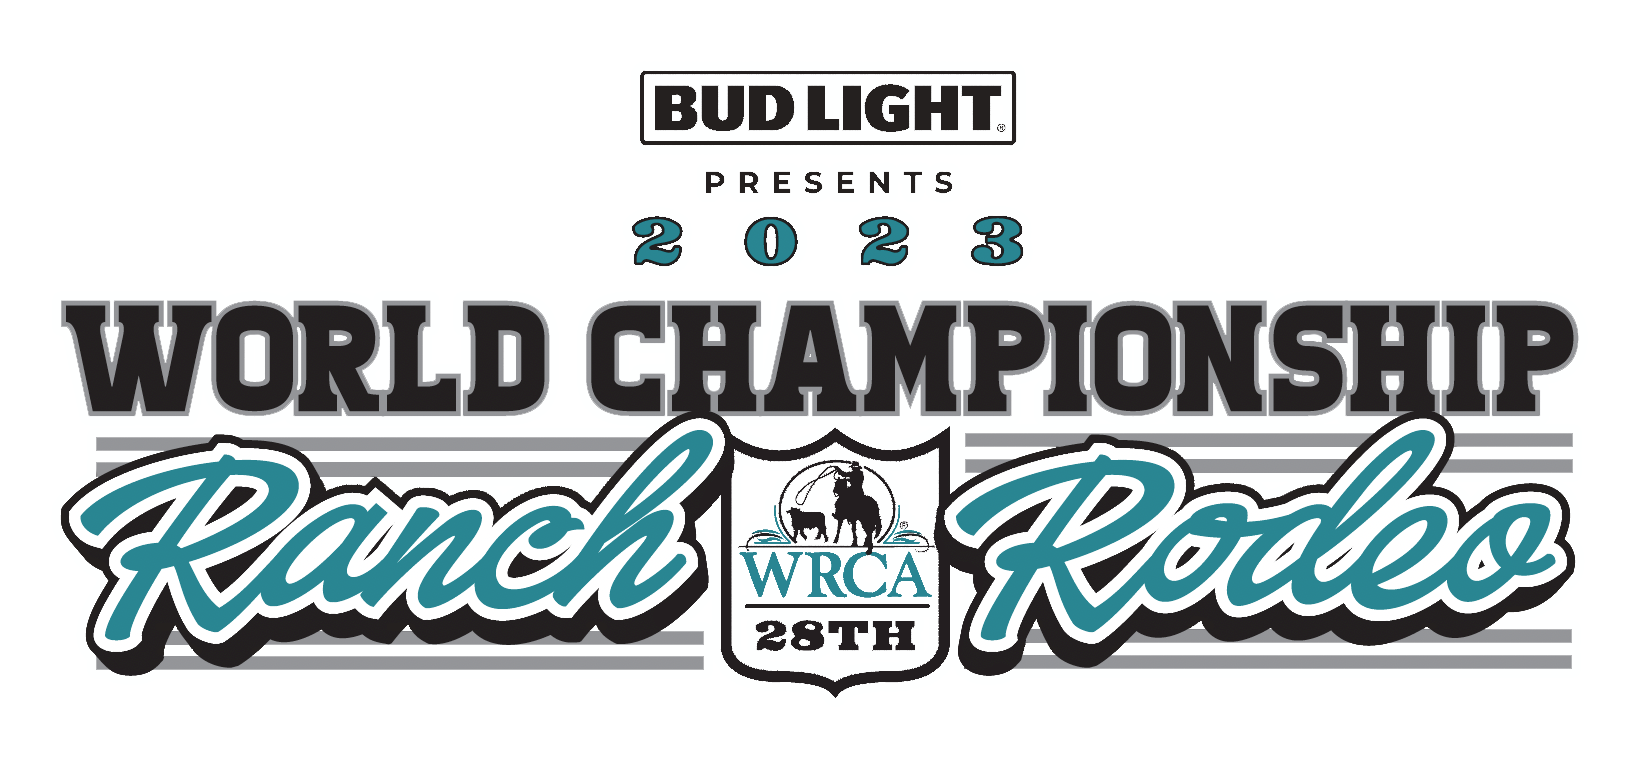 WRCA World Championship Ranch Rodeo Logo